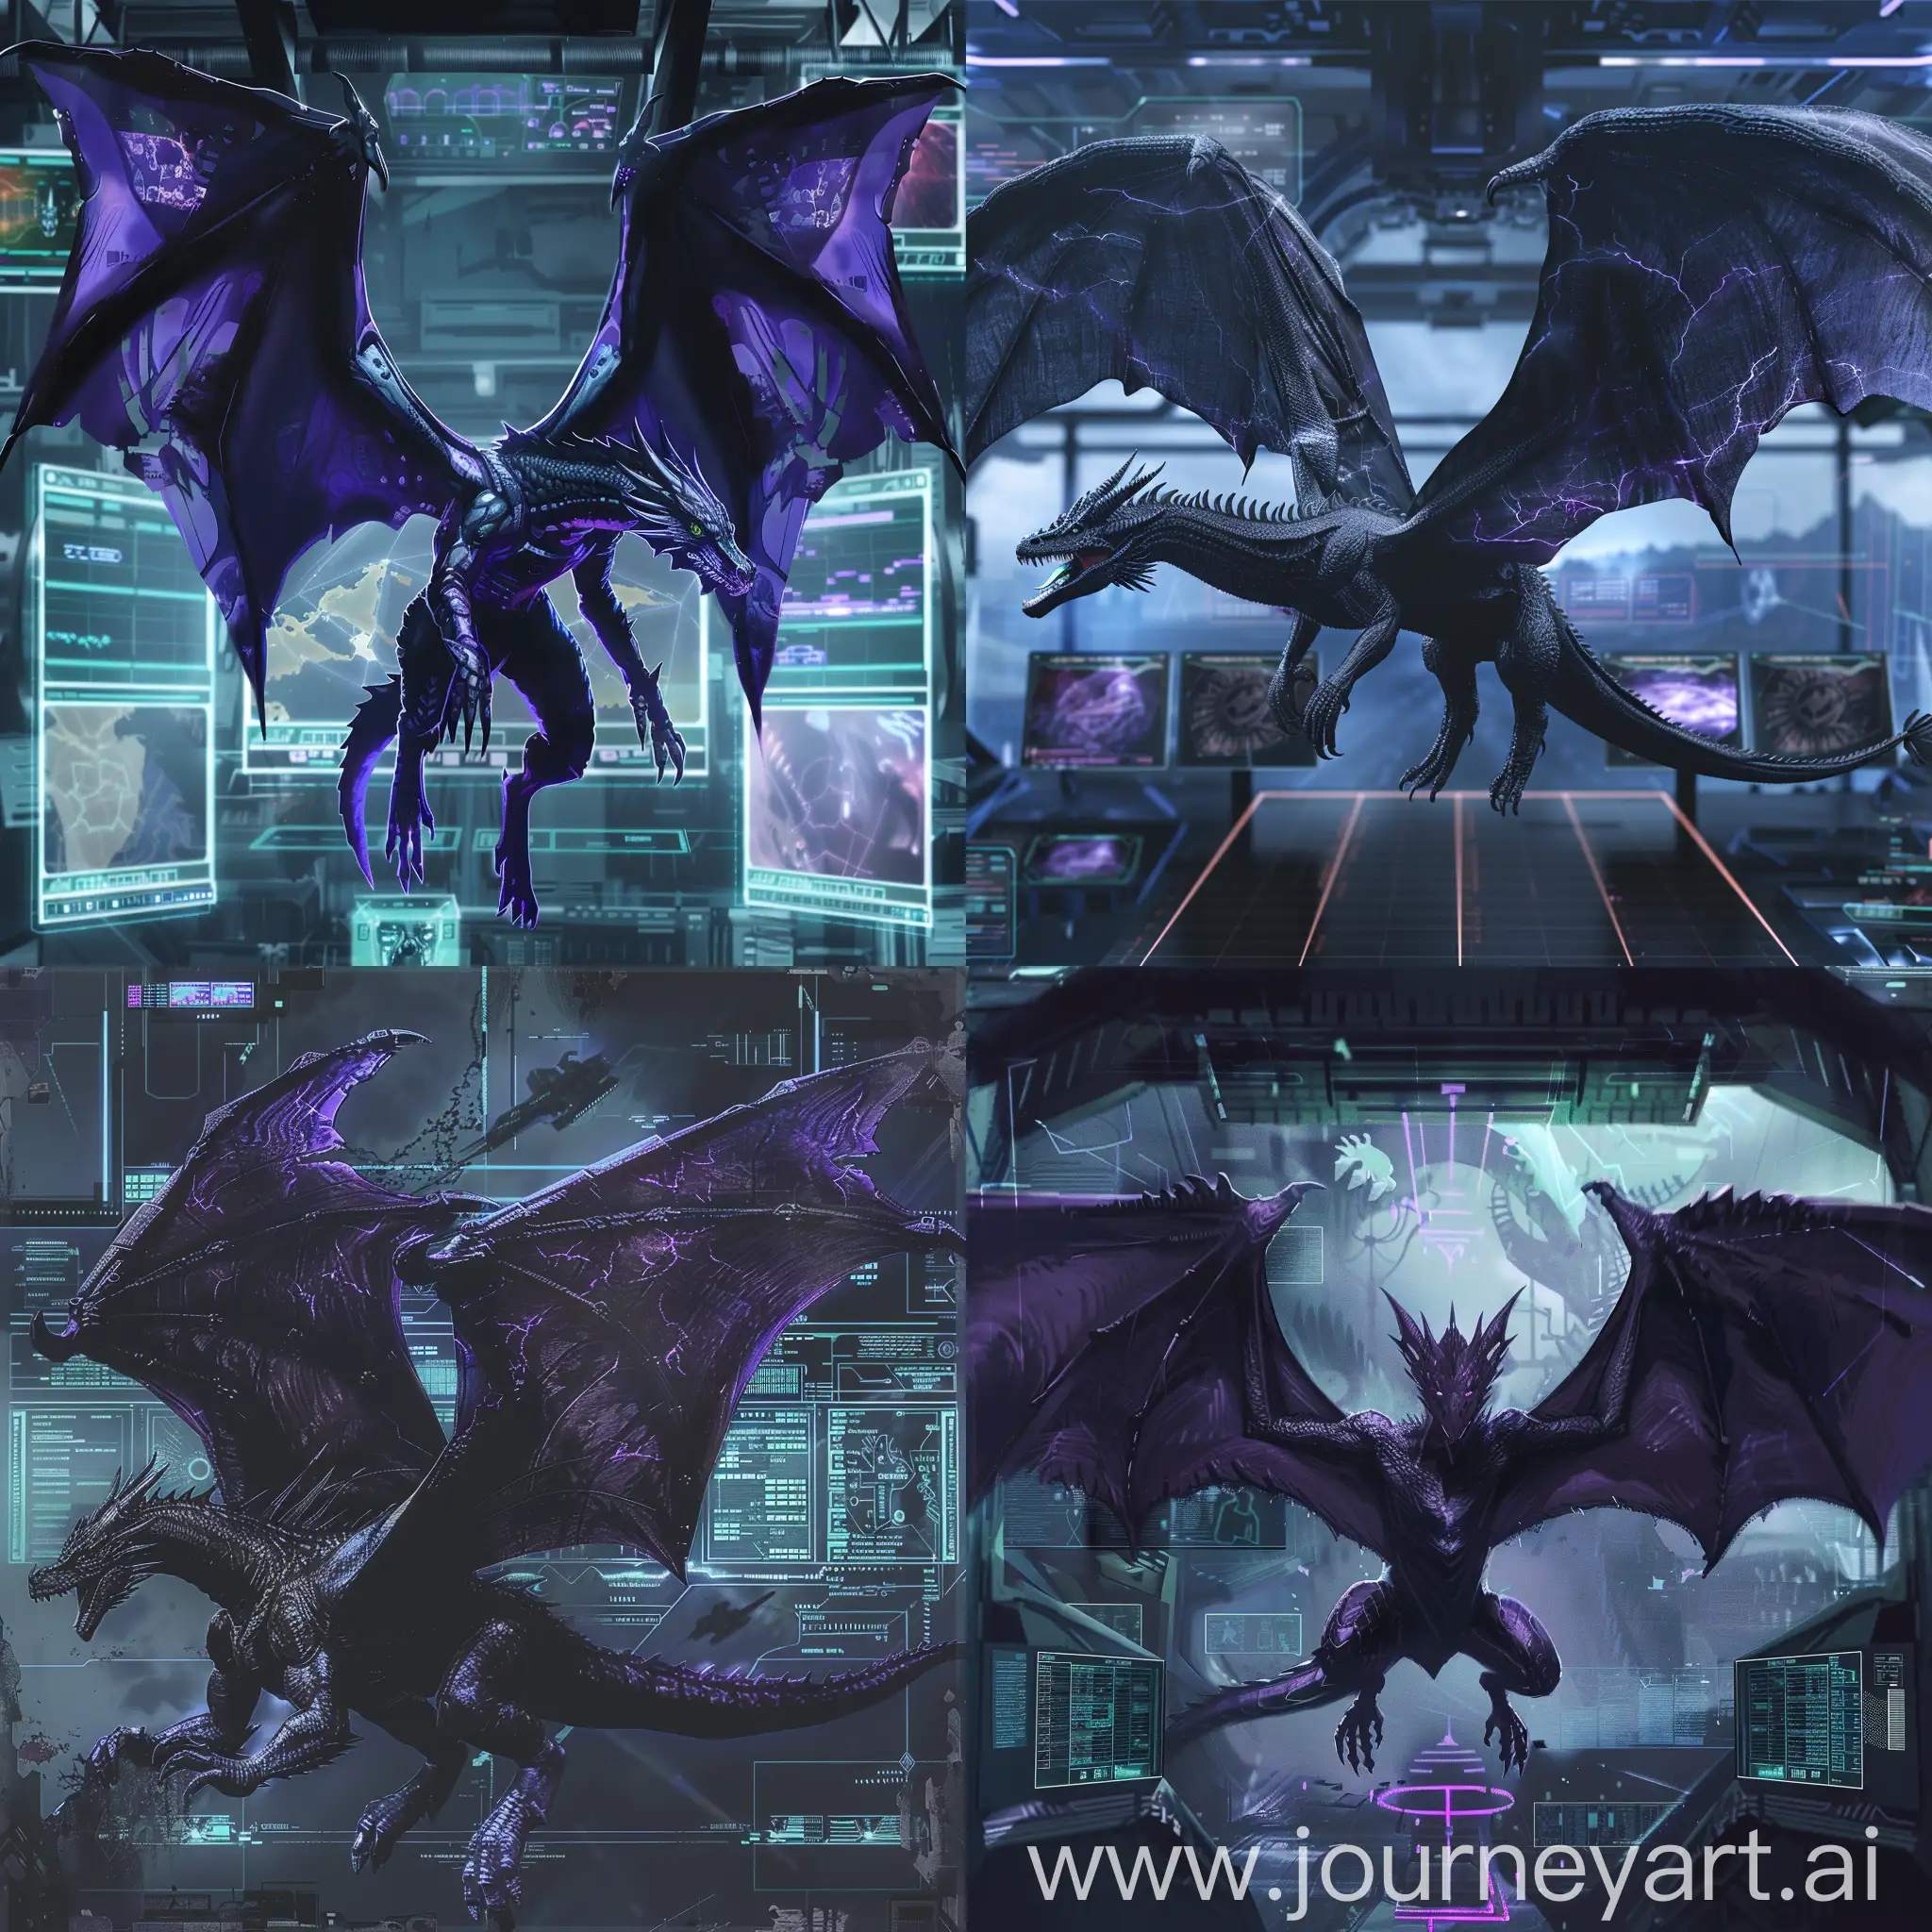 Futuristic-BlackPurple-Dragon-Hologram-with-Imposing-Wings